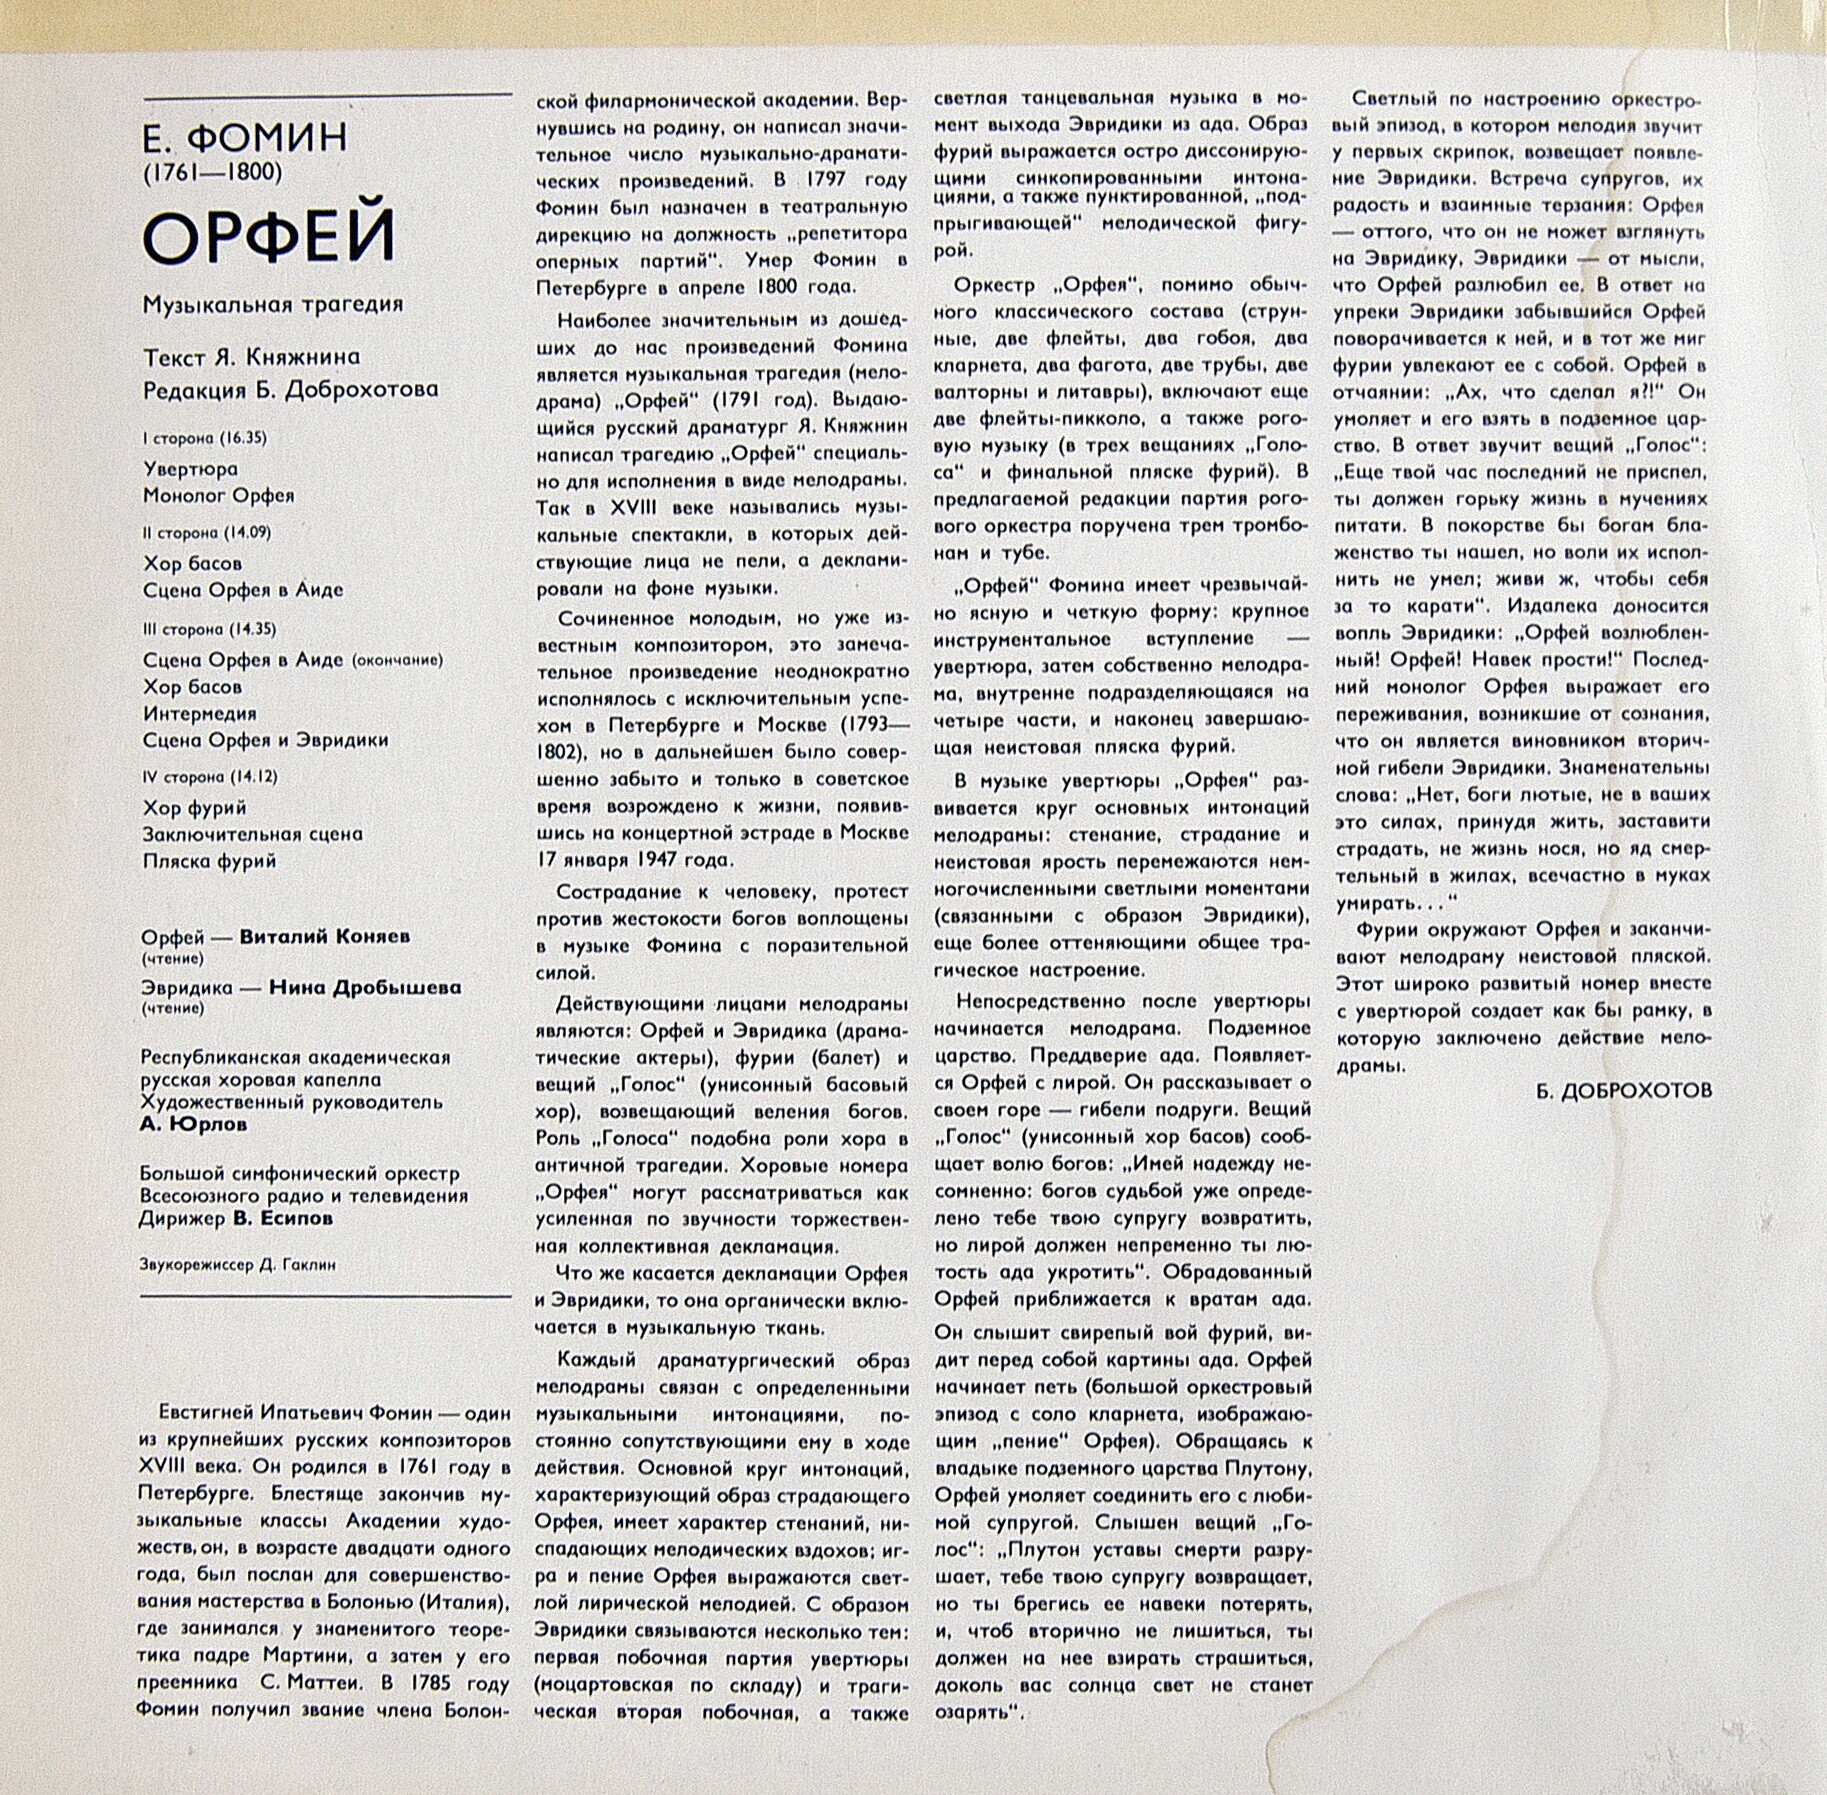 Е. ФОМИН (1761-1800): «Орфей», музыкальная трагедия (редакция Б. Доброхотова)